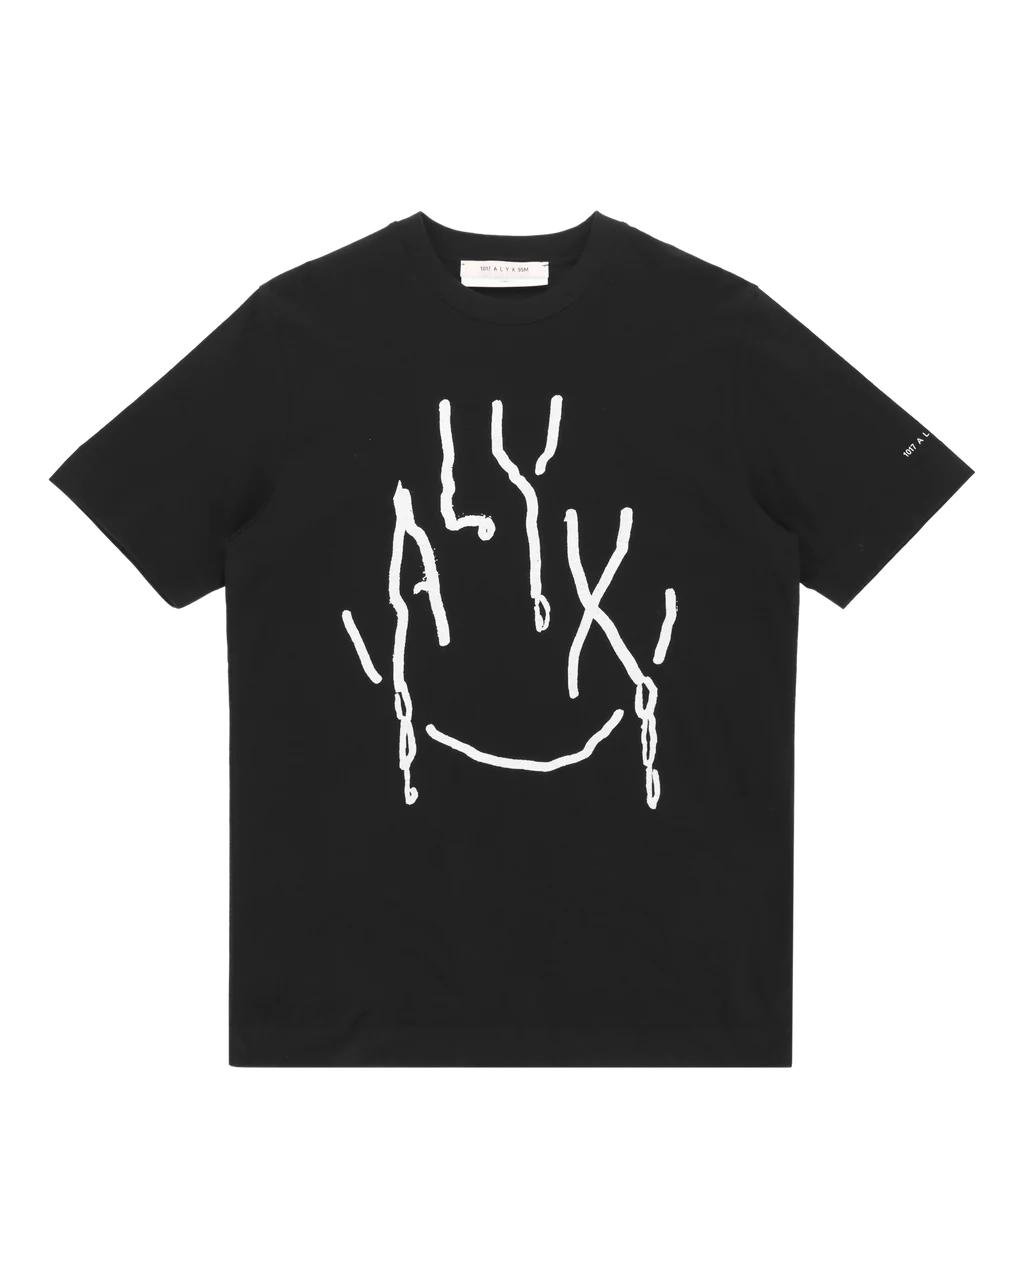 Alyx Men's S/S Graphic T-Shirt (Black) by ALYX